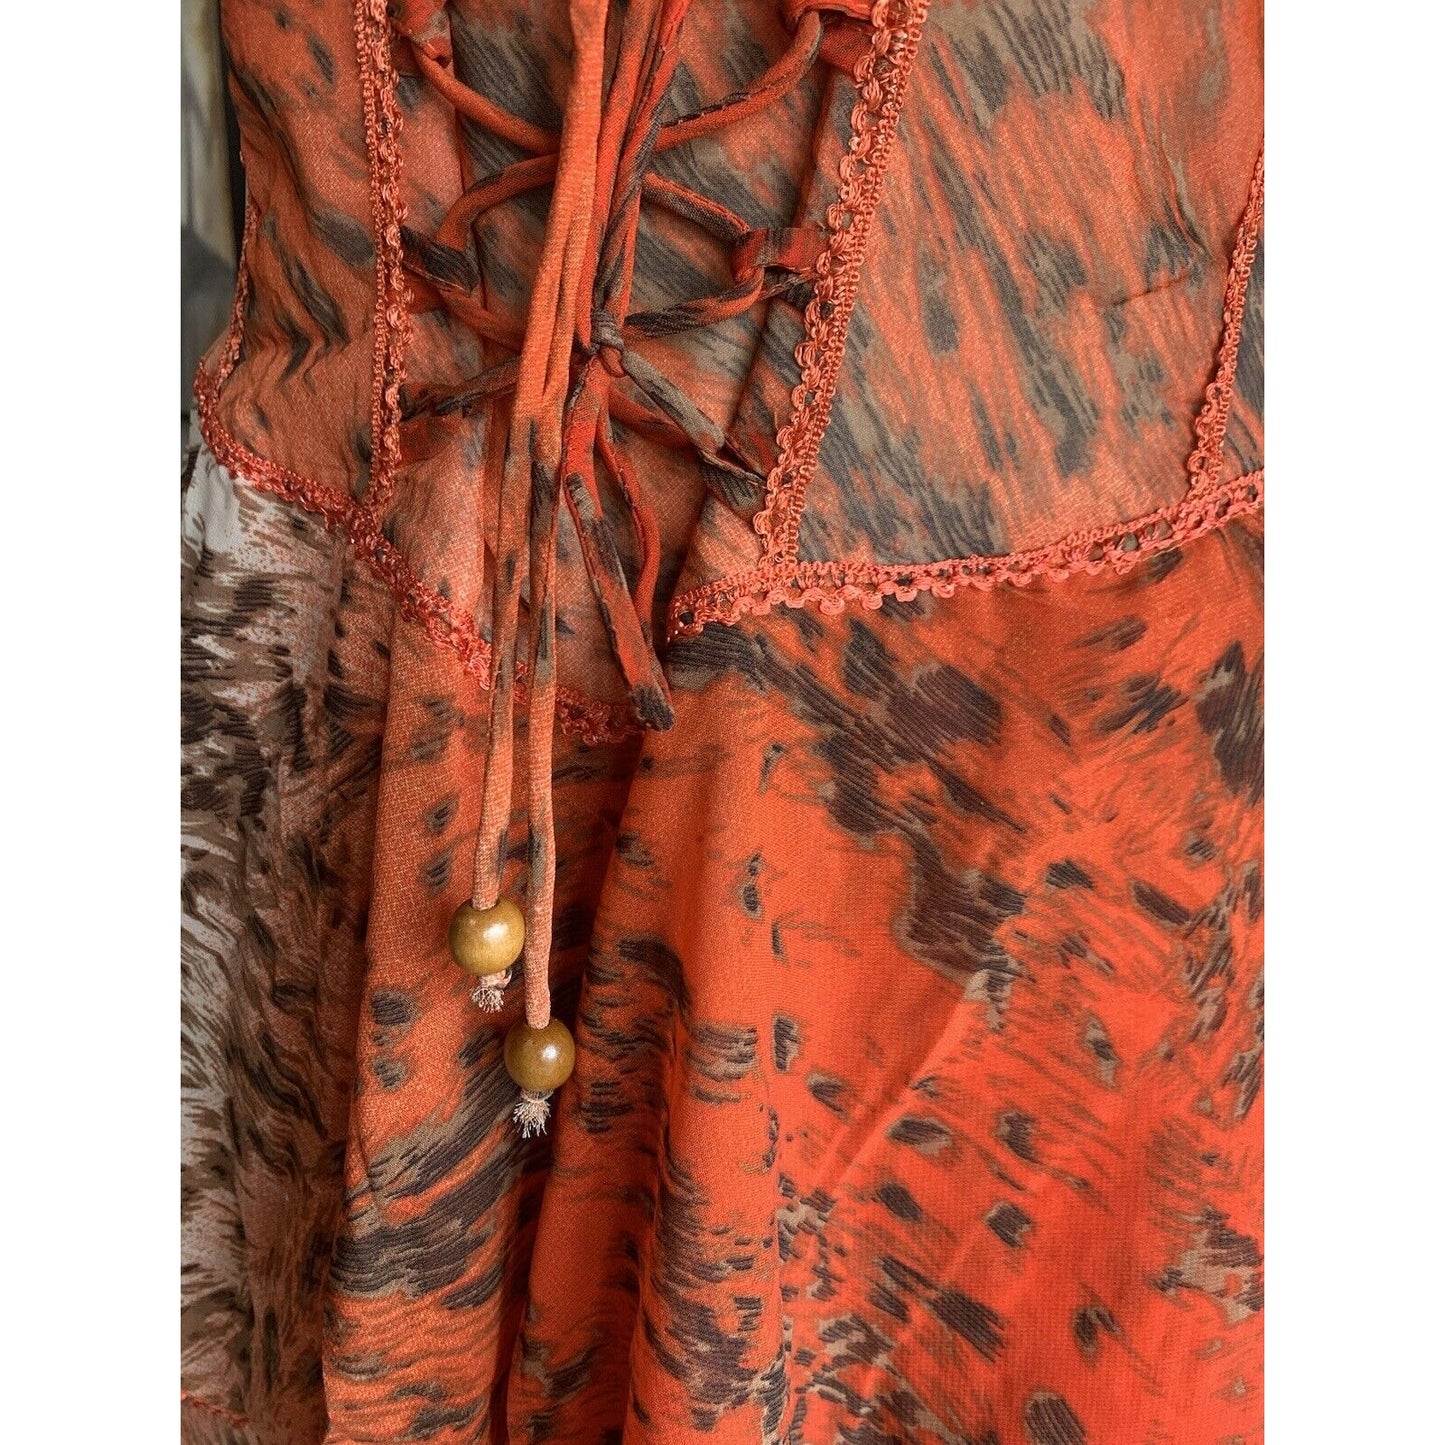 Closeup Of Beads And Trim On Orange Abstract Animal Print Corset Handkerchief Dress